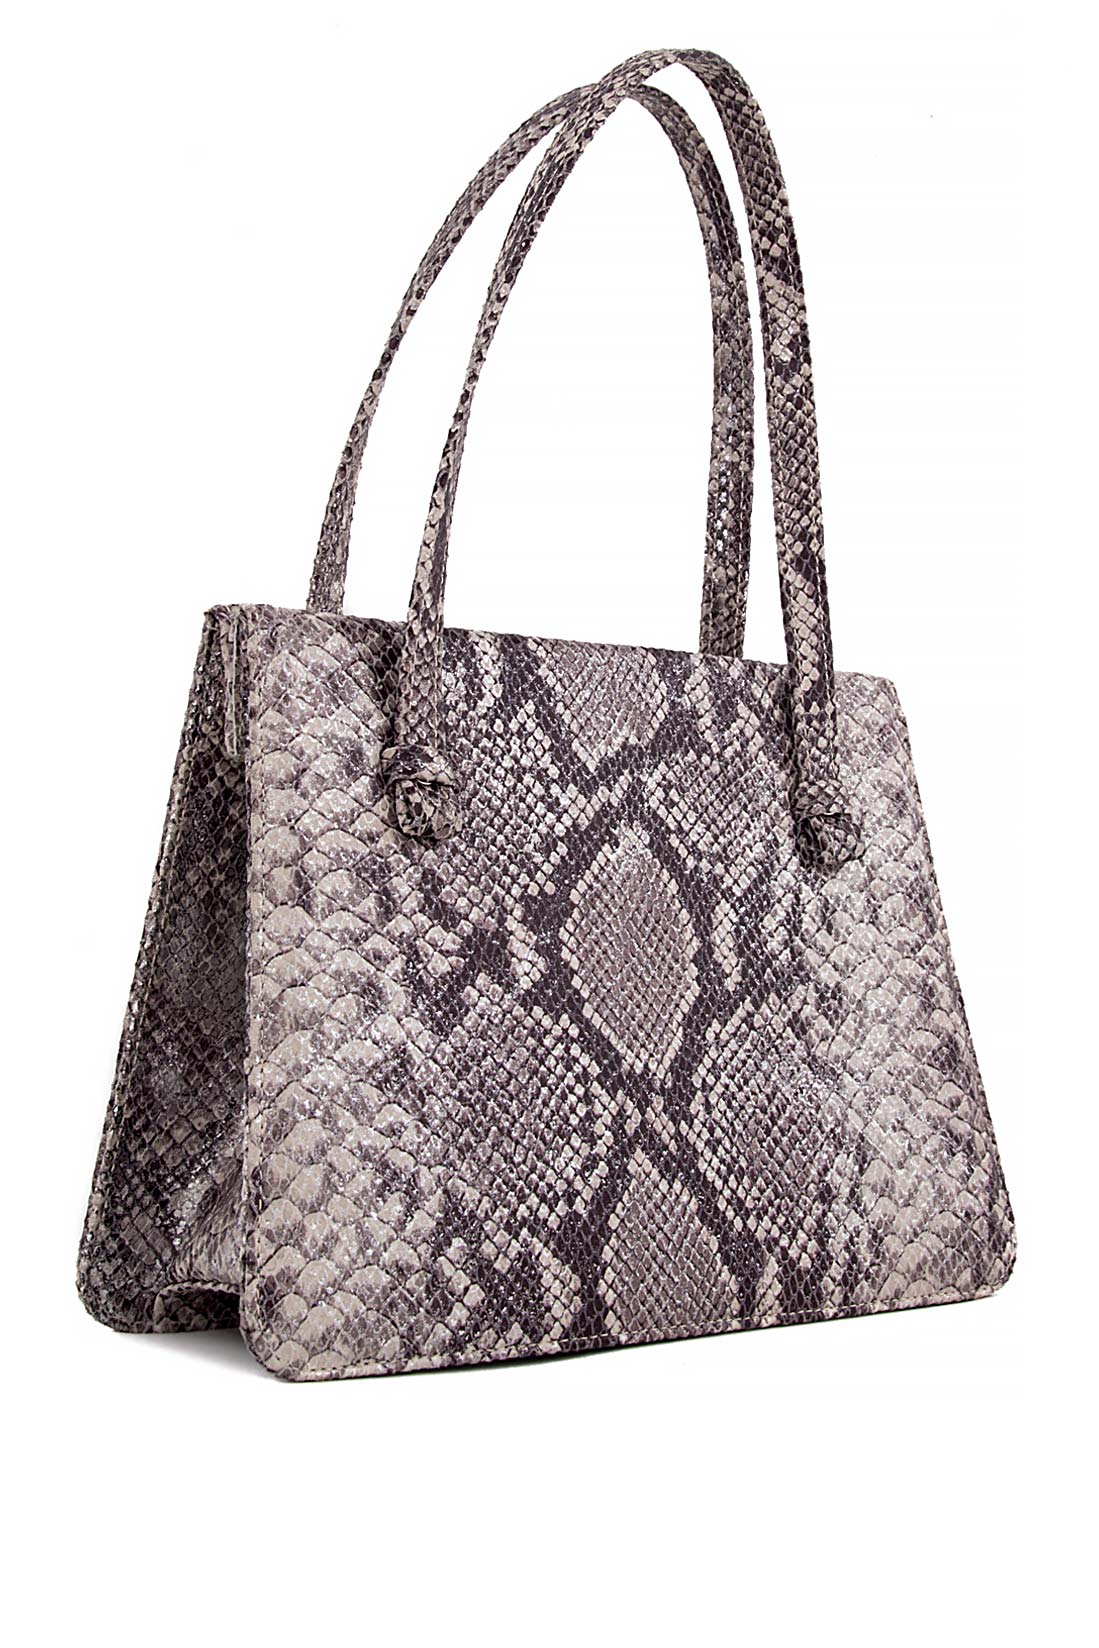 Snake-print leather bag Laura Olaru image 1